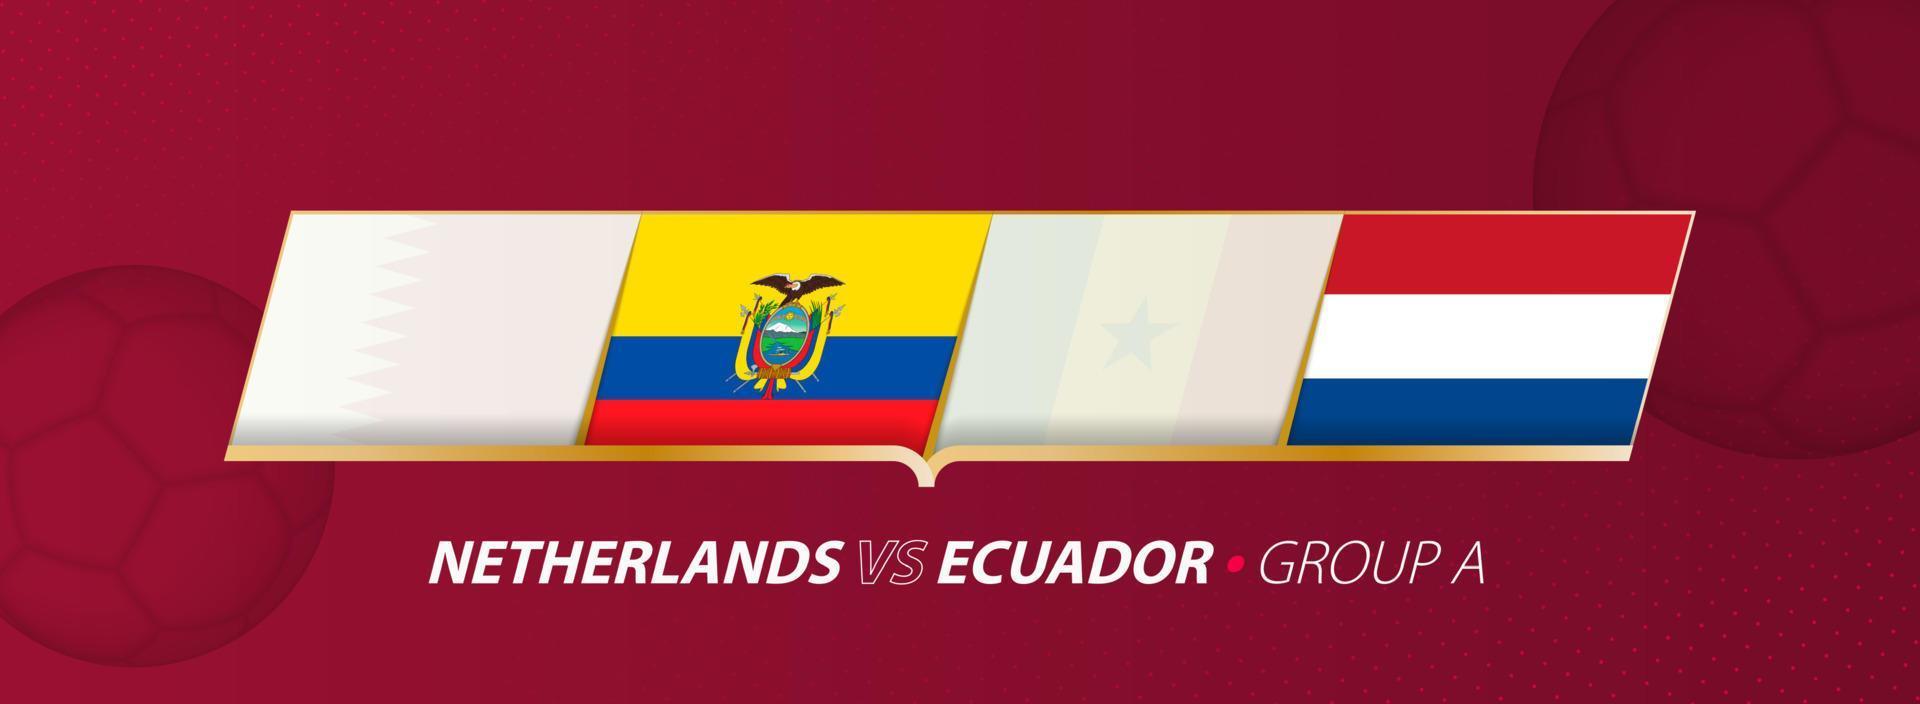 Netherlands - Ecuador football match illustration in group A. vector